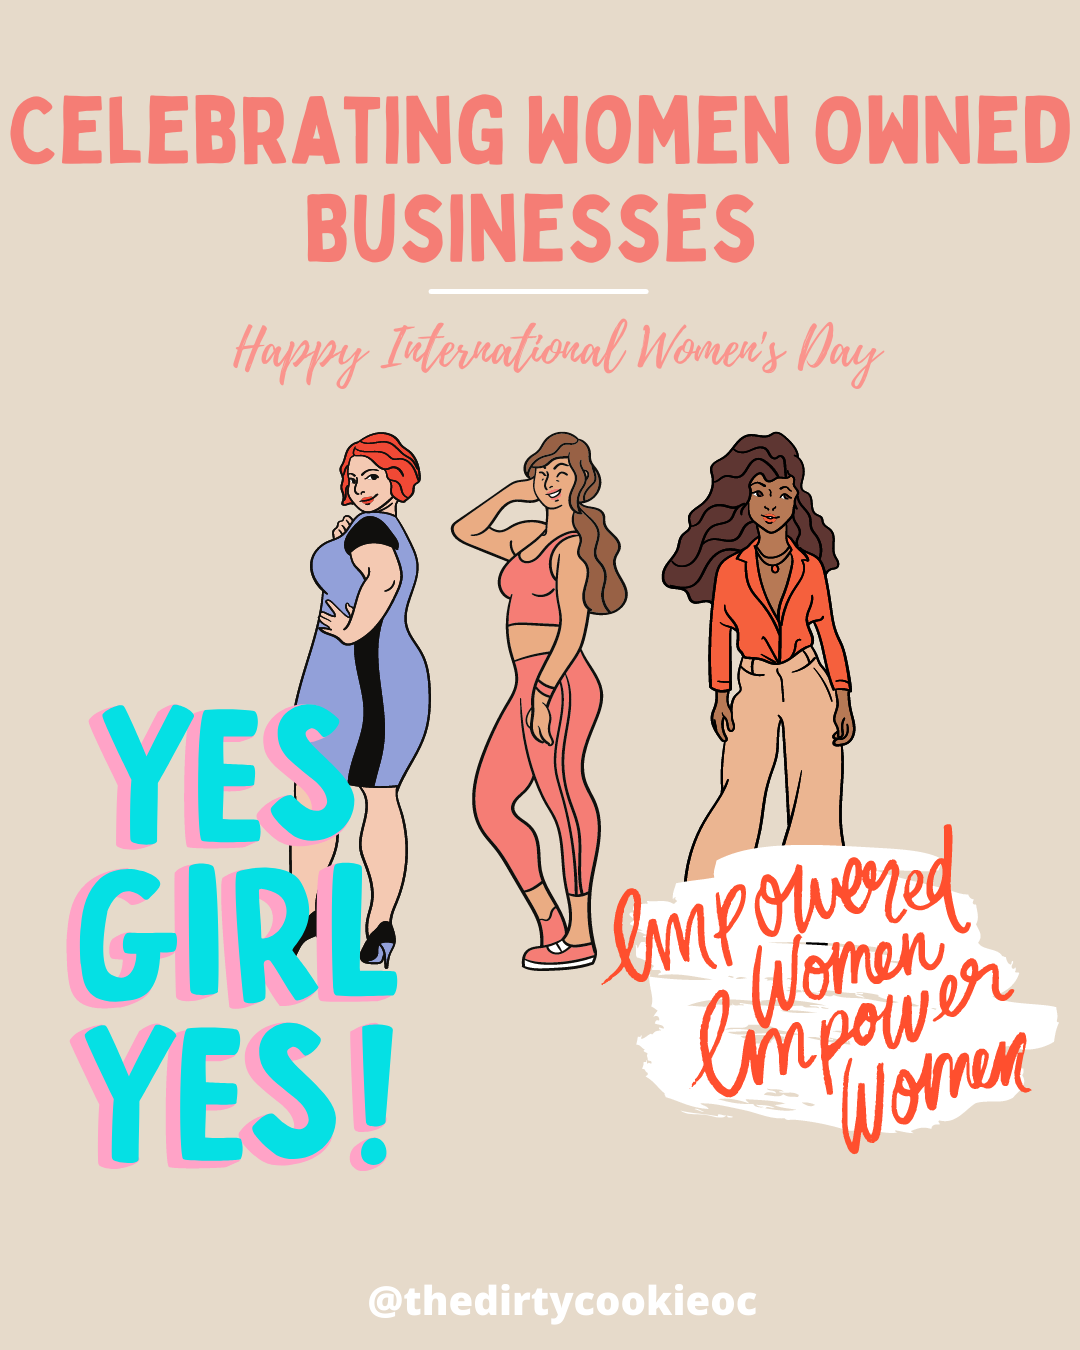 Celebrating Women Owned Businesses on International Women's Day